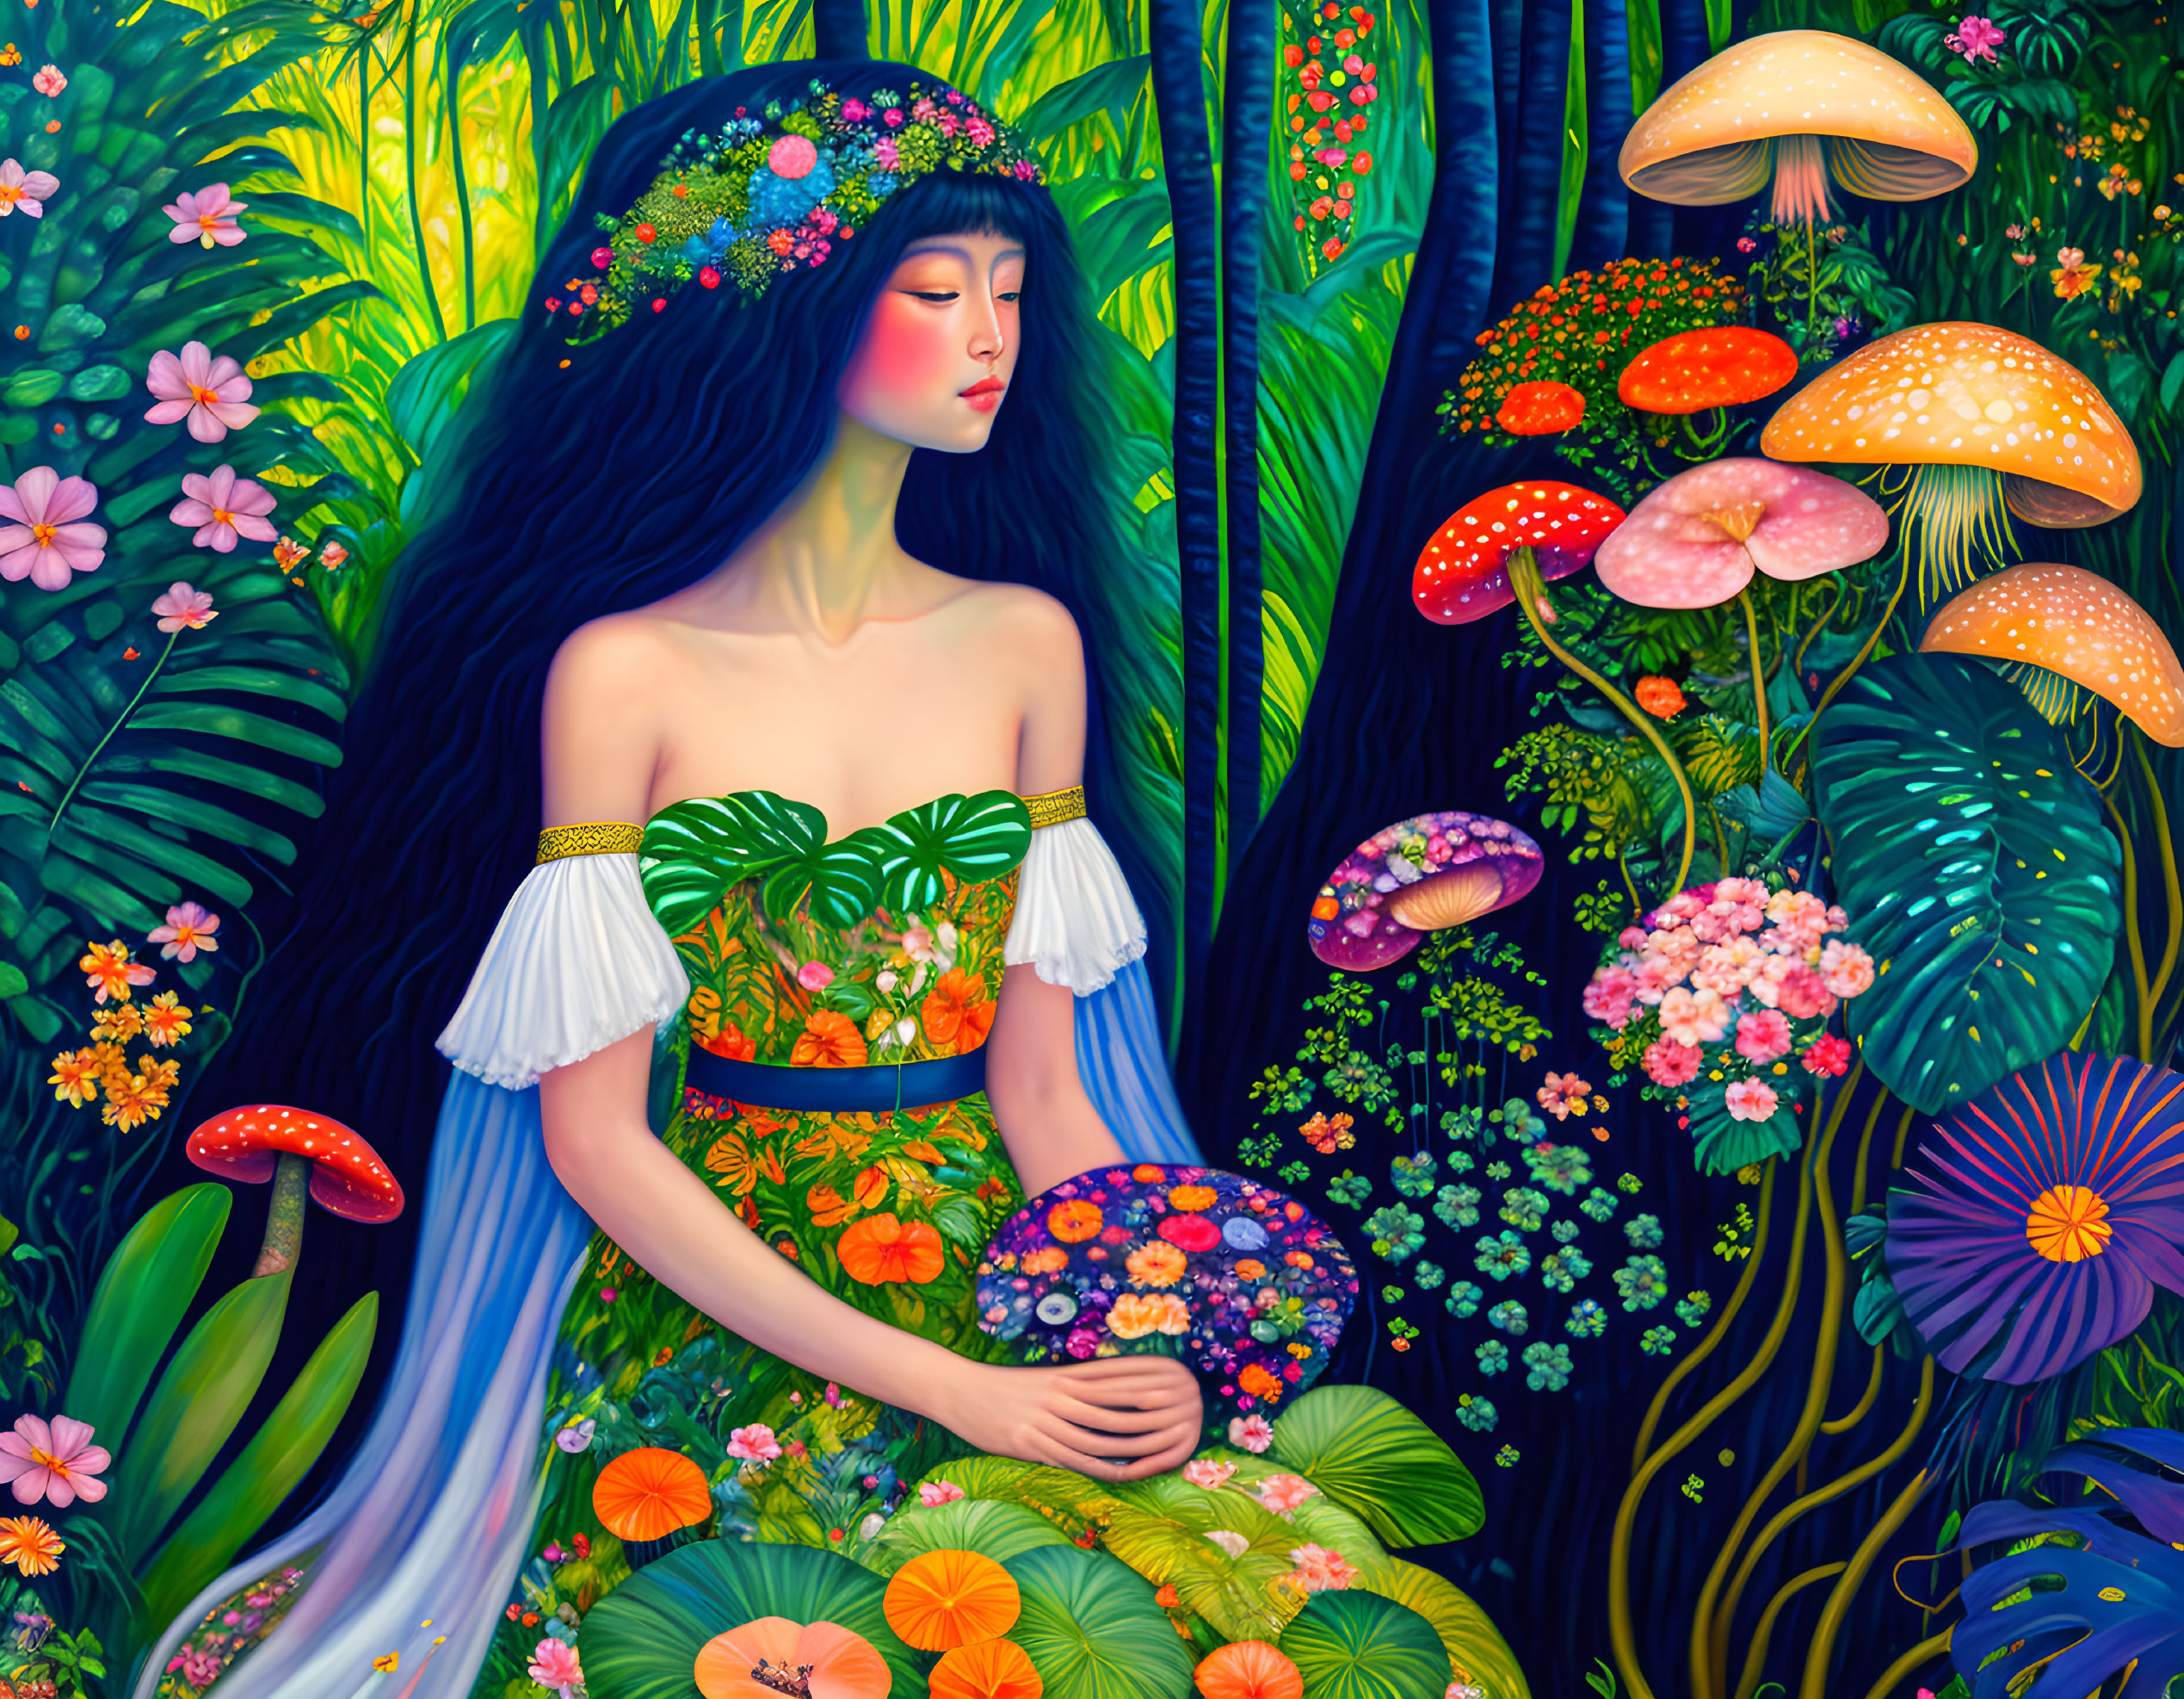 Rainforest Princess at Dusk